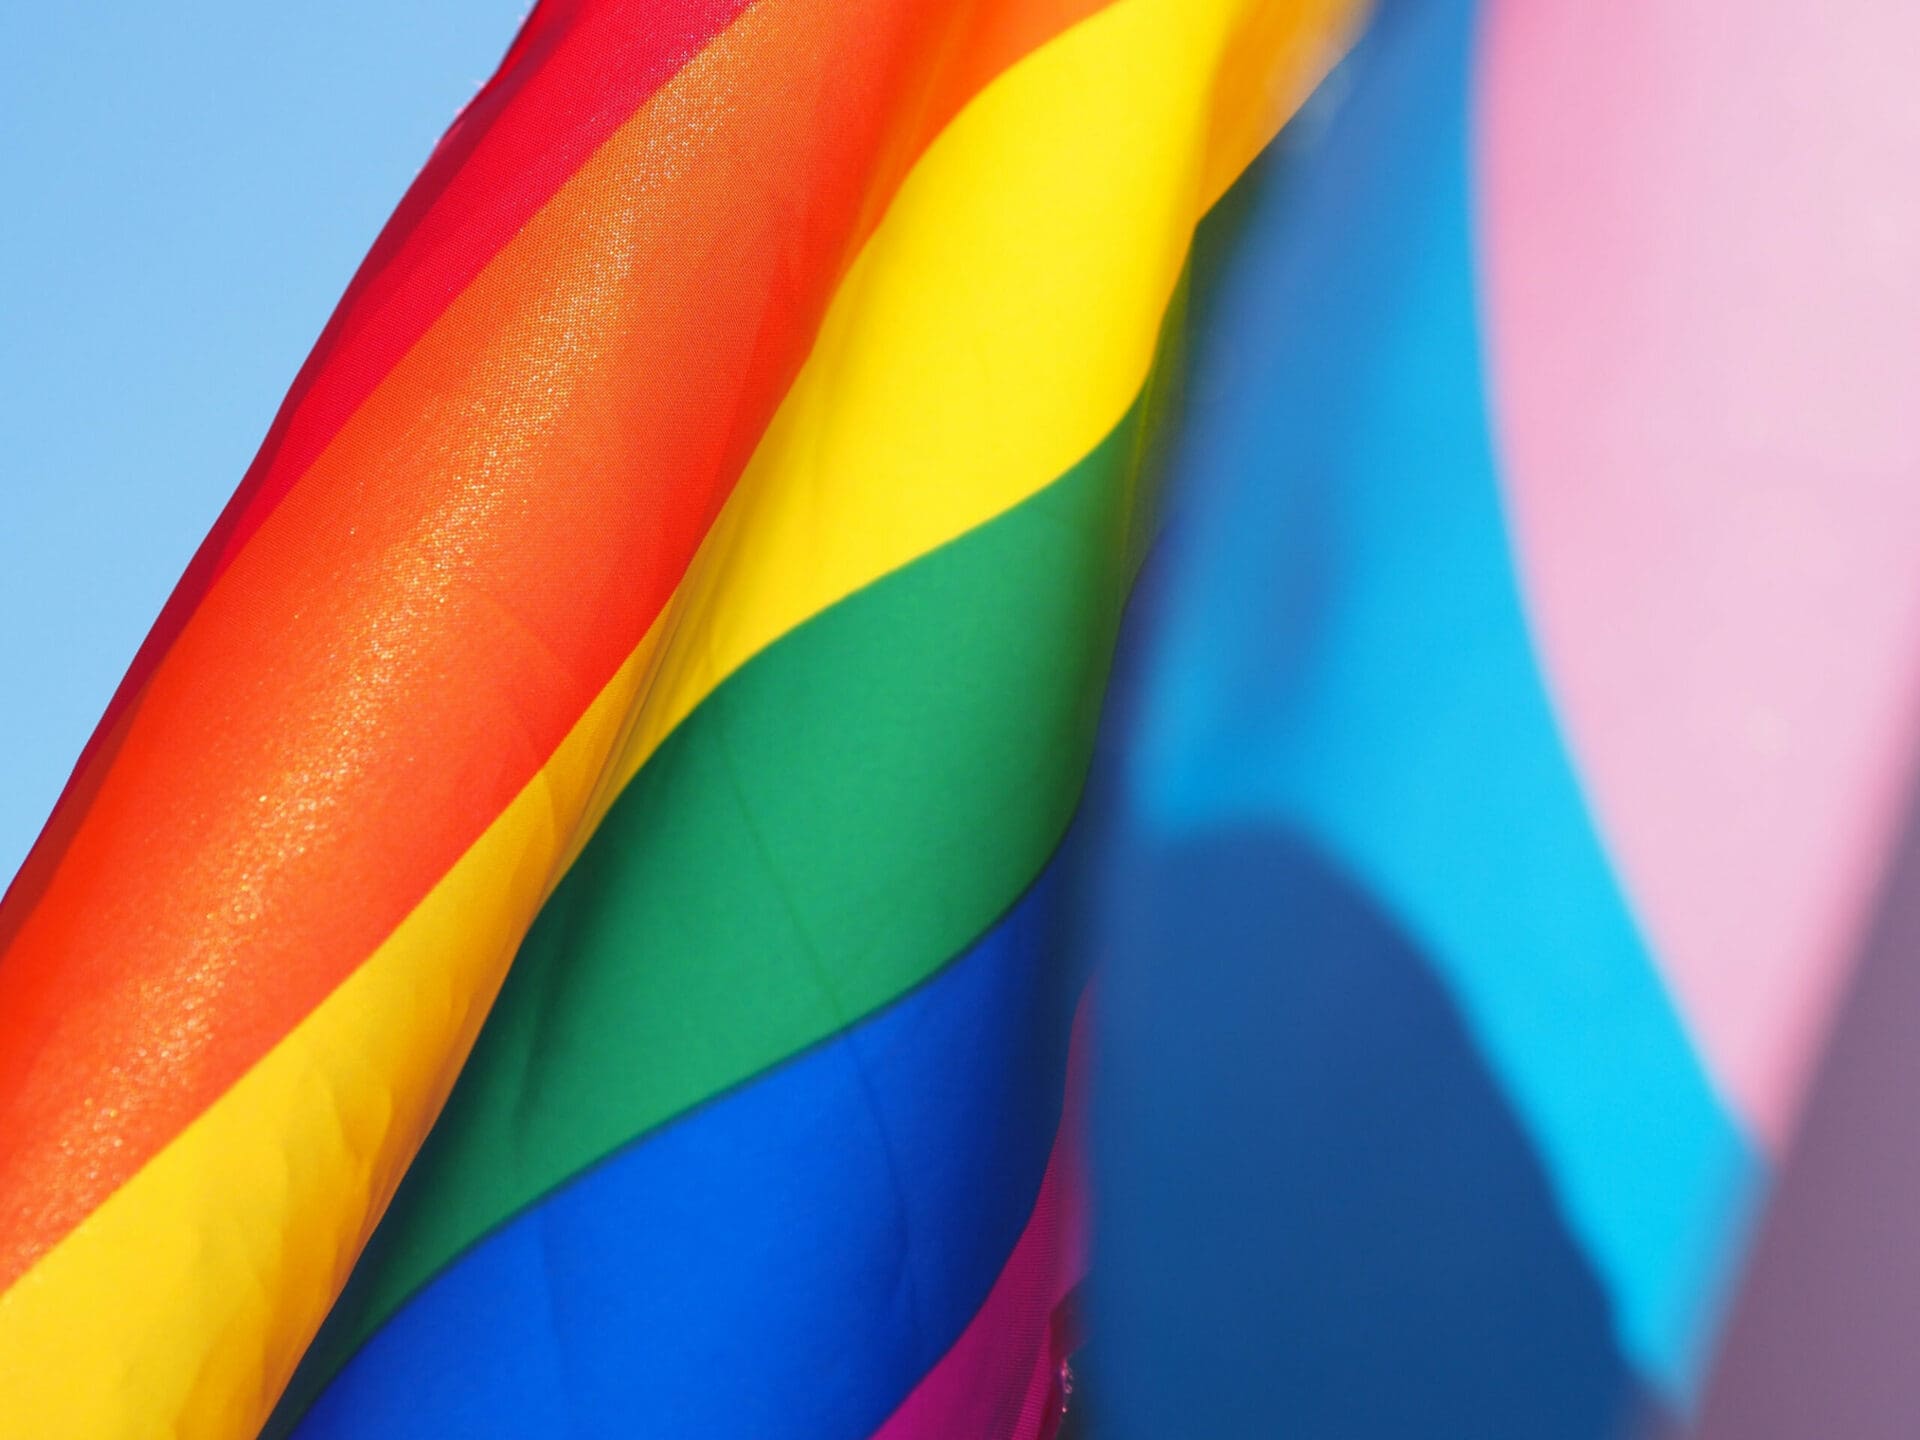 LGBT pride flags against a blue sky